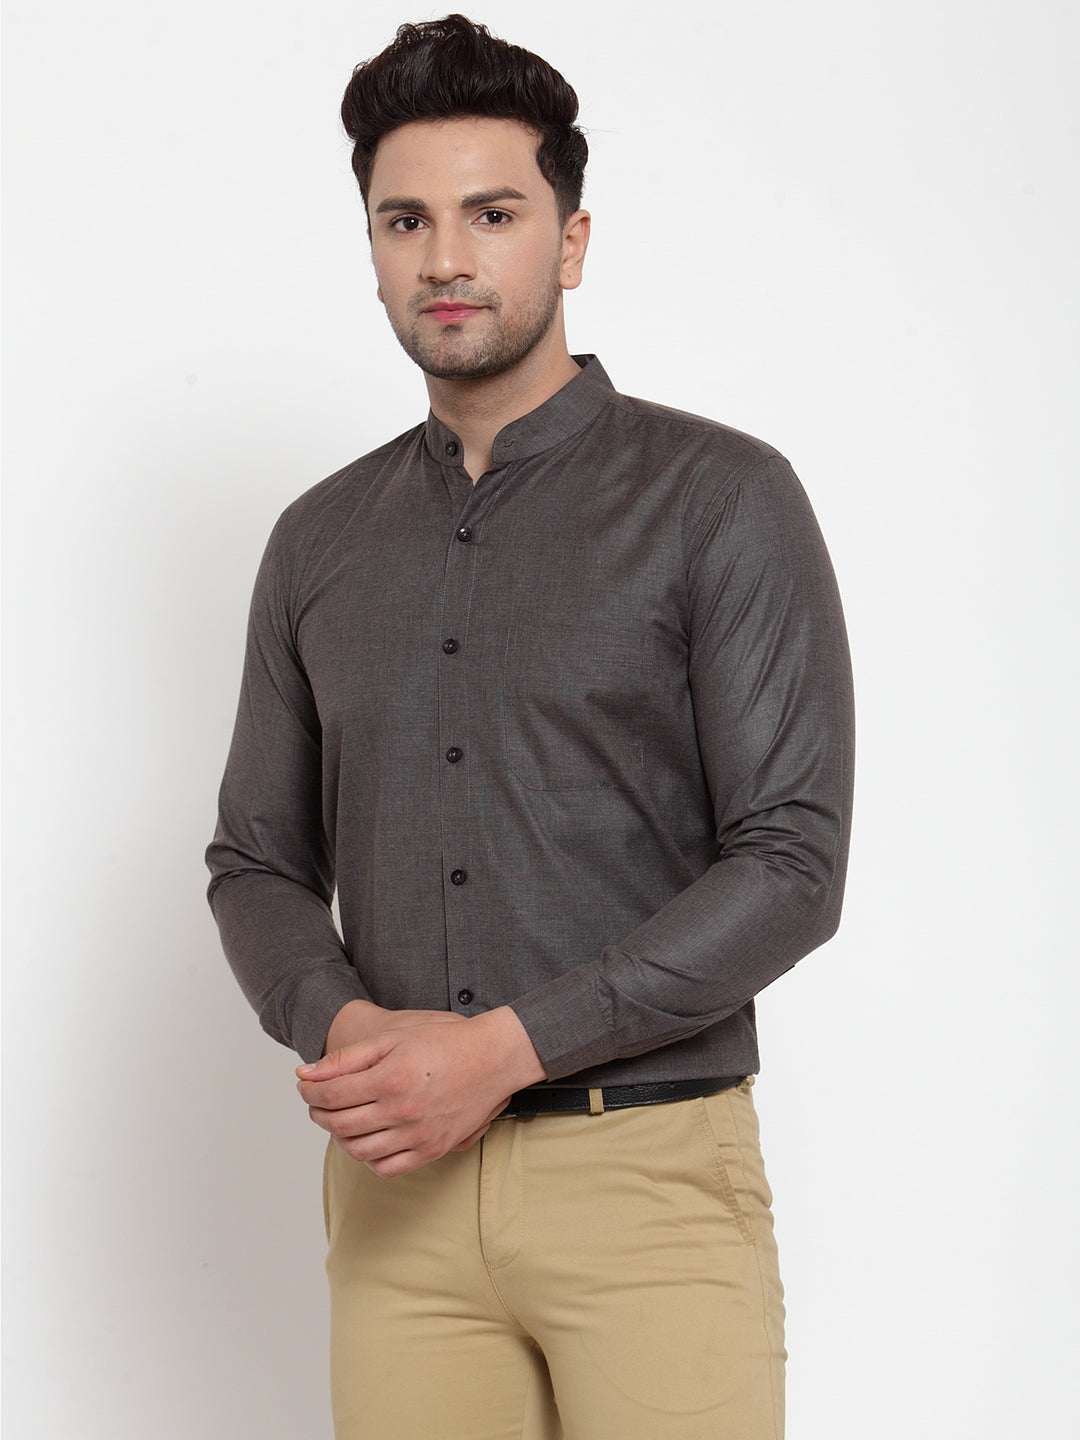 Men's Grey Melange Cotton Solid Mandarin Collar Formal Shirts ( SF 726Charcoal ) - Jainish